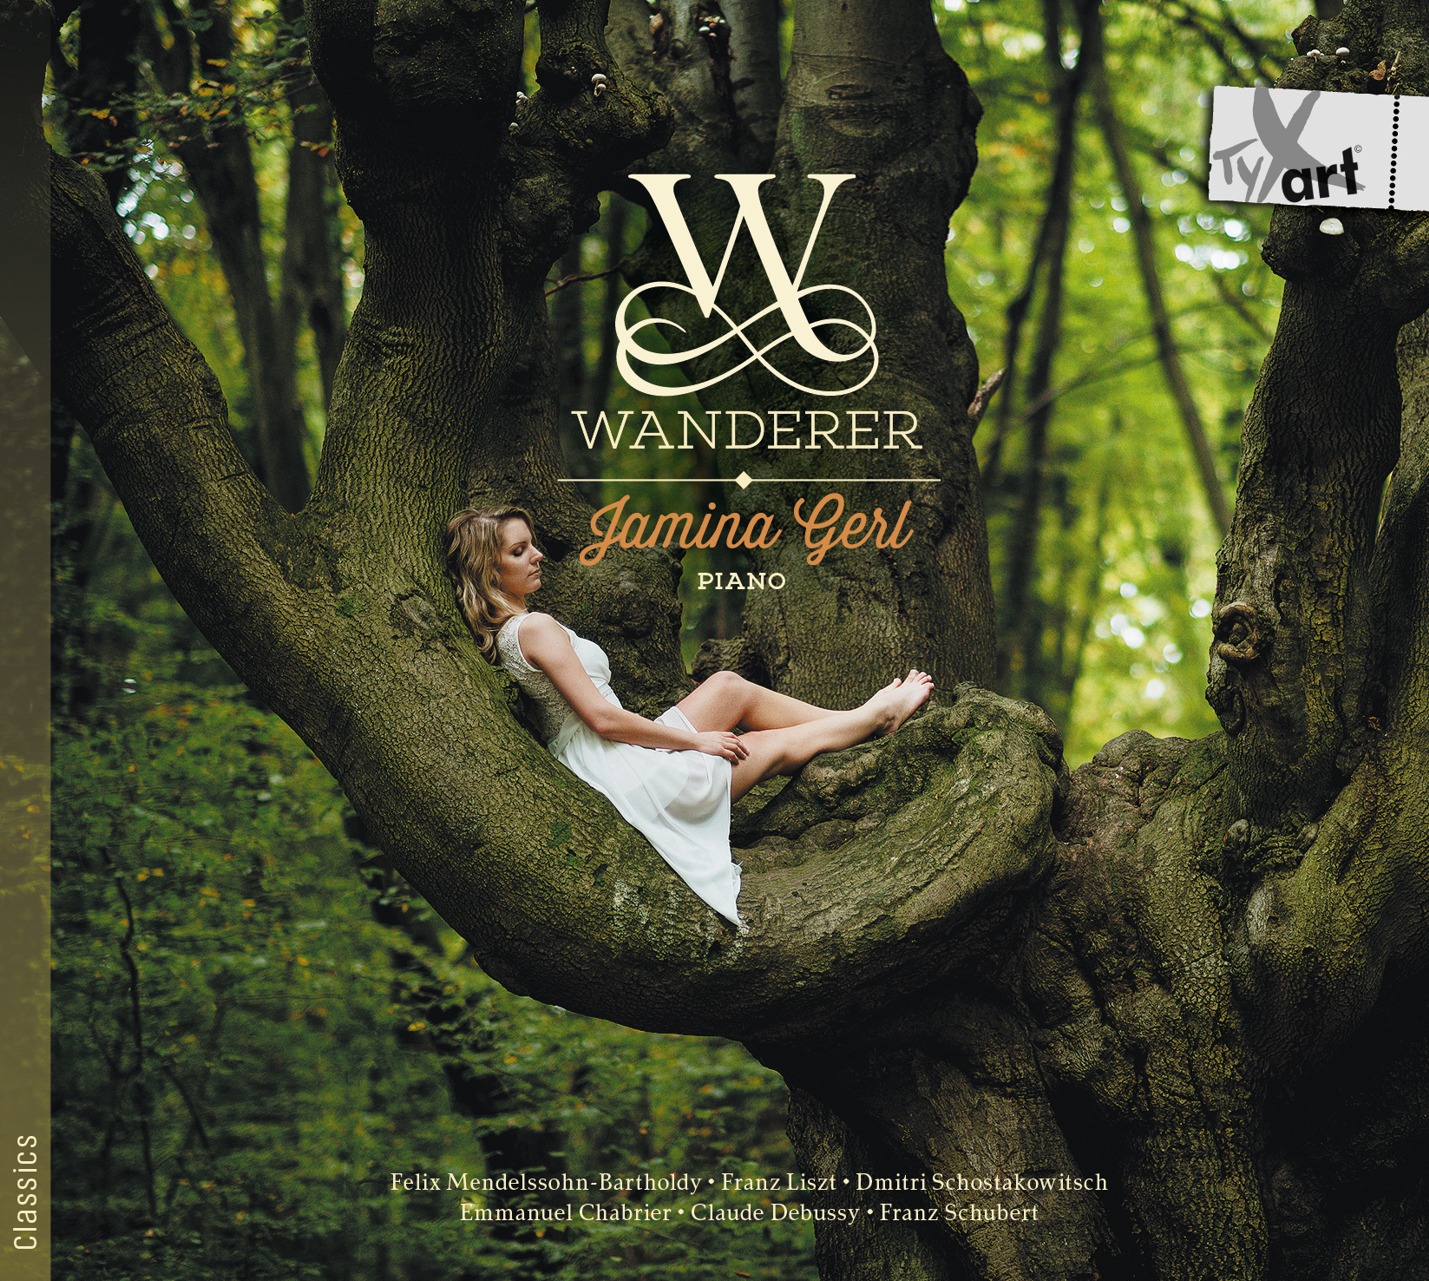 WANDERER - Jamina Gerl, piano